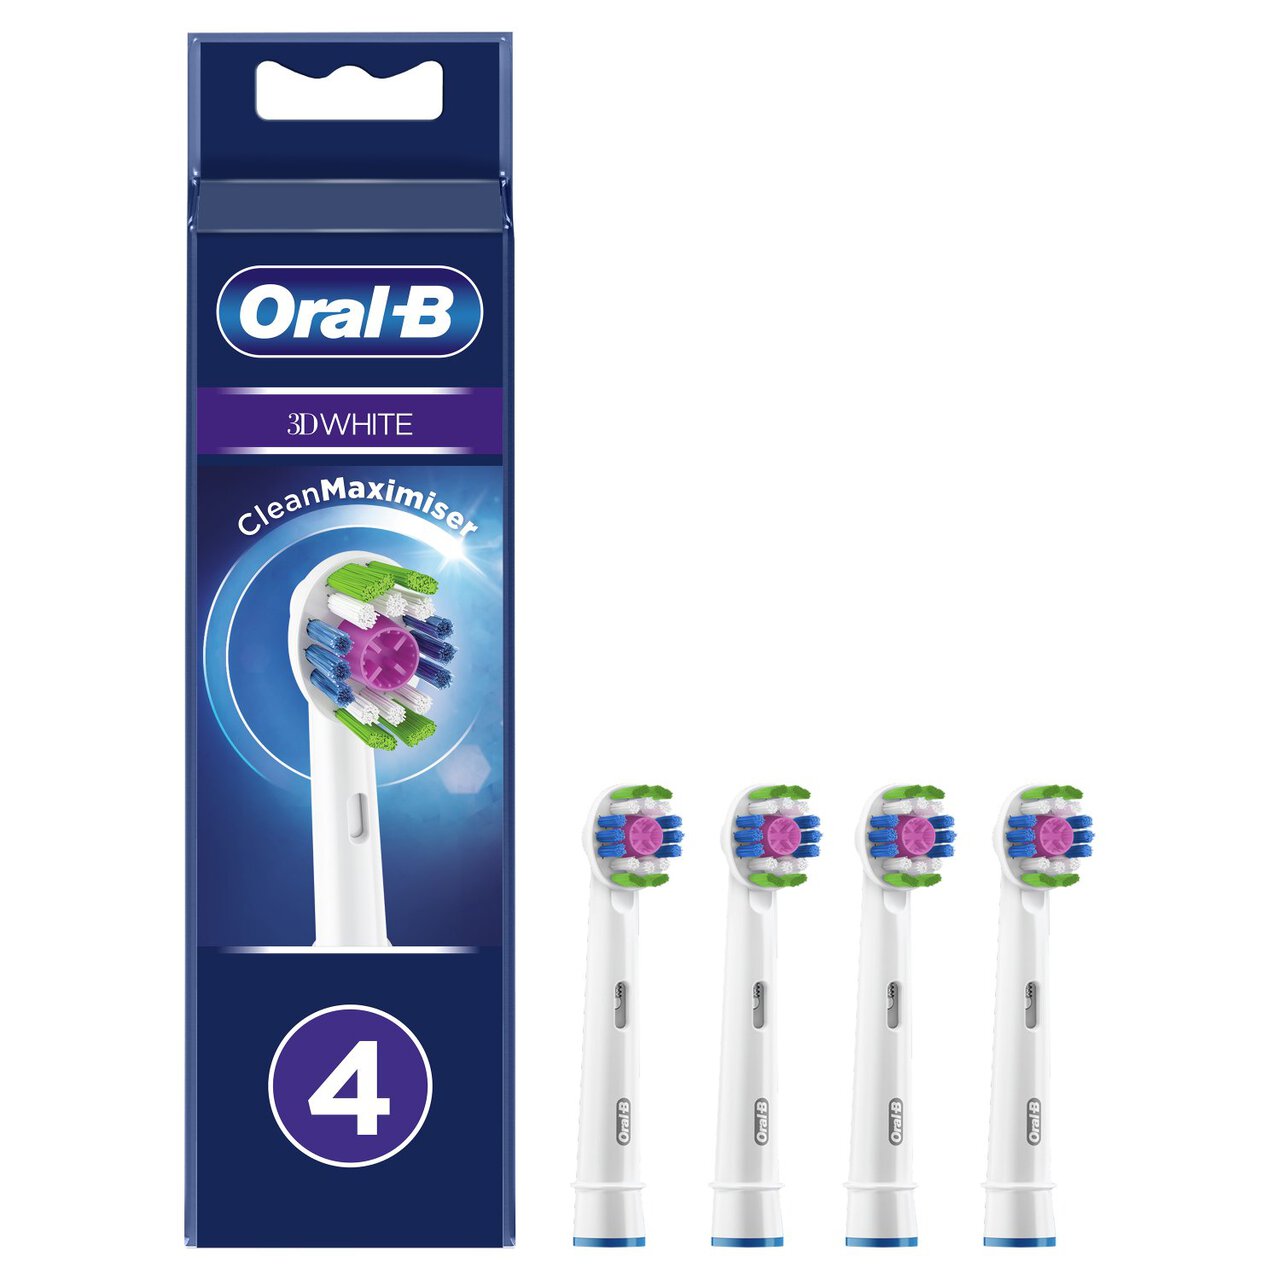 Oral-B 3DWhite Toothbrush Heads 4 per pack